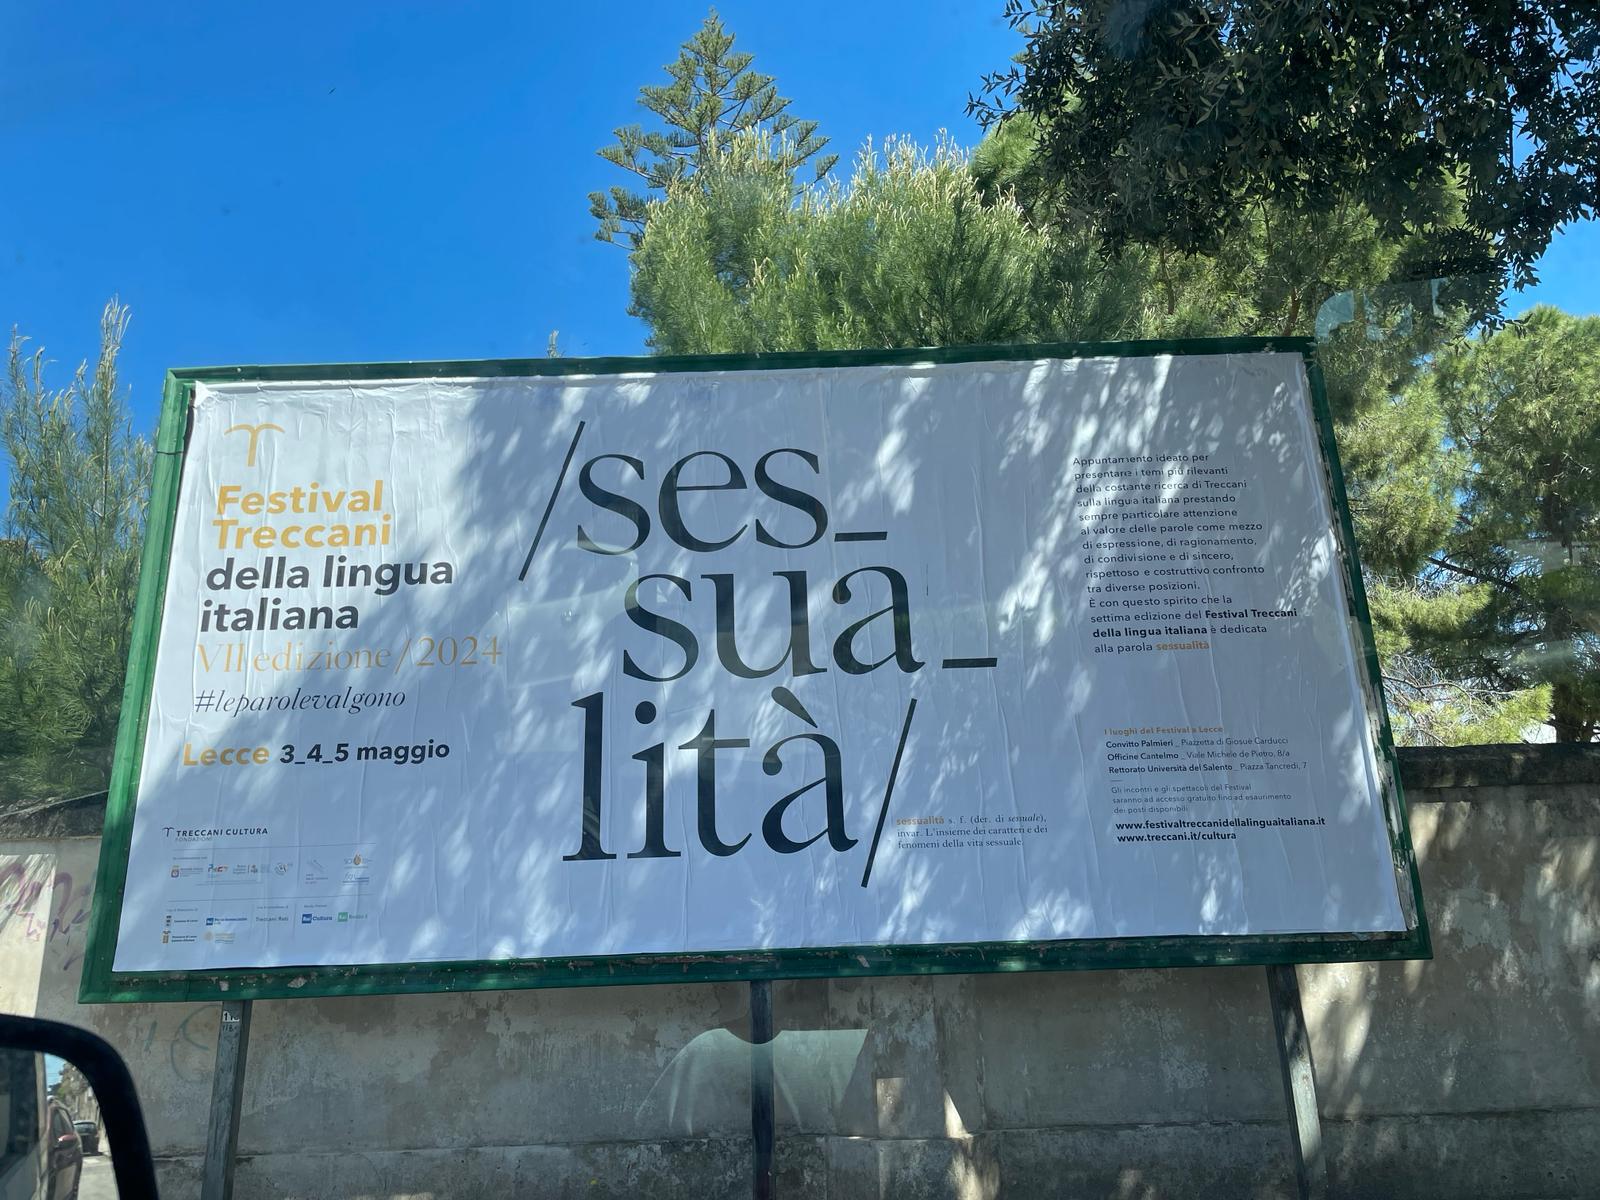 The Treccani Italian Language Festival talks about sexuality